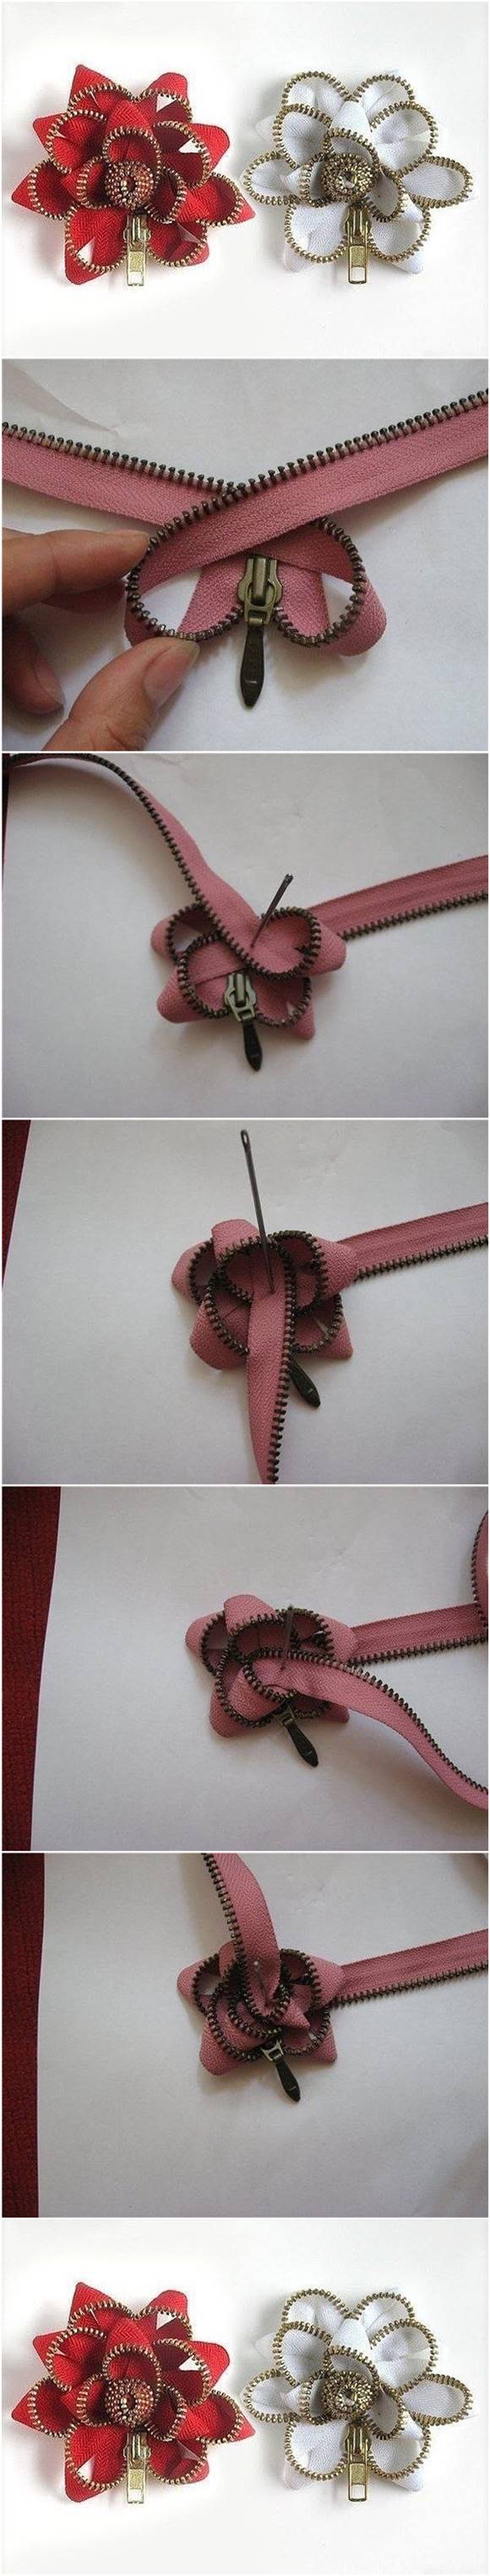 How to Make Easy Zipper Flowers